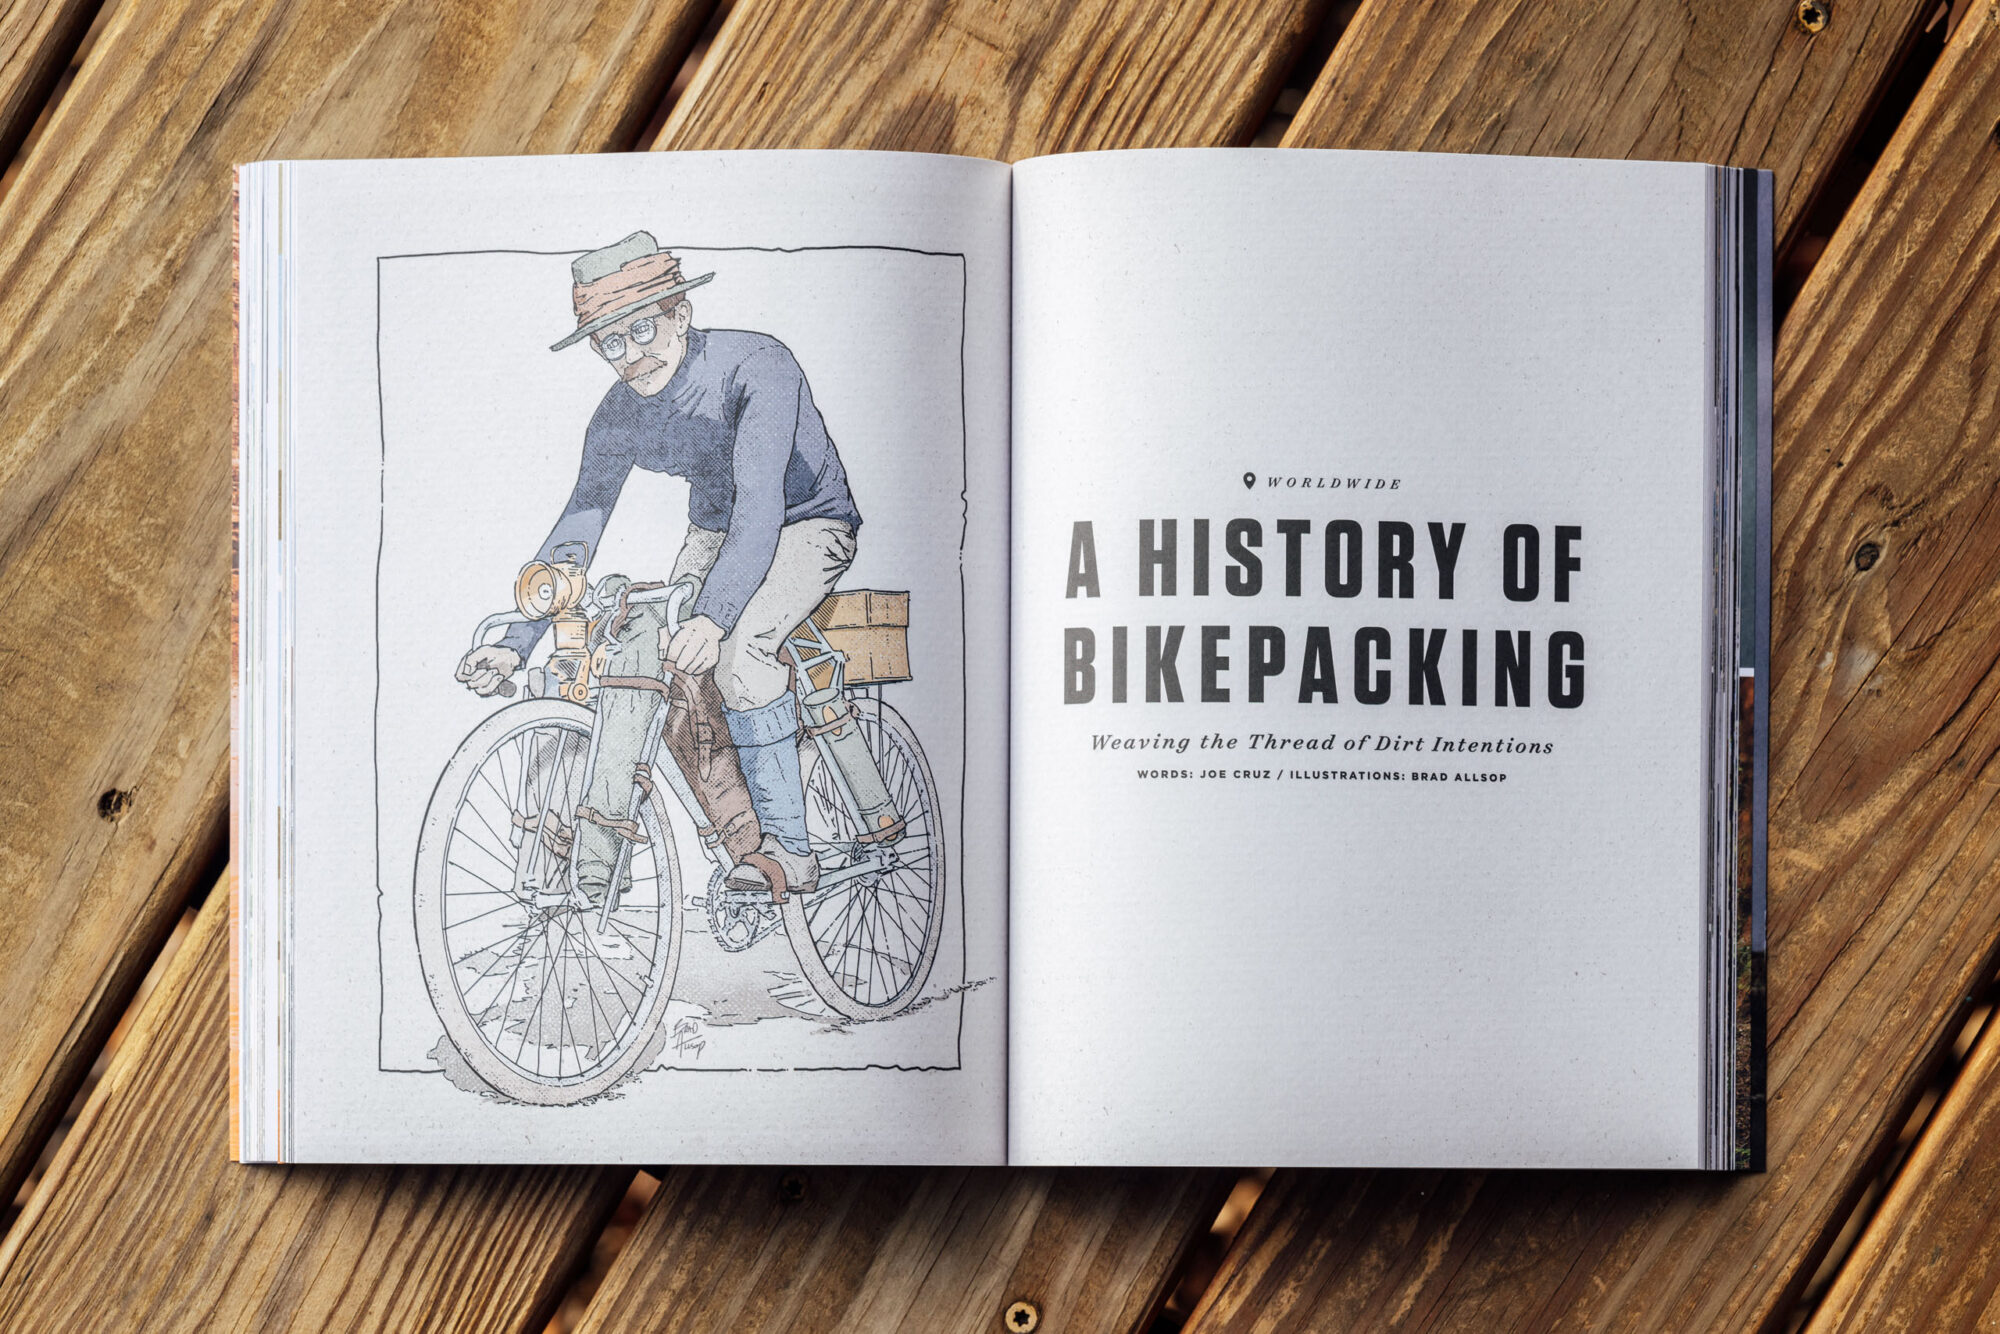 History of Bikepacking